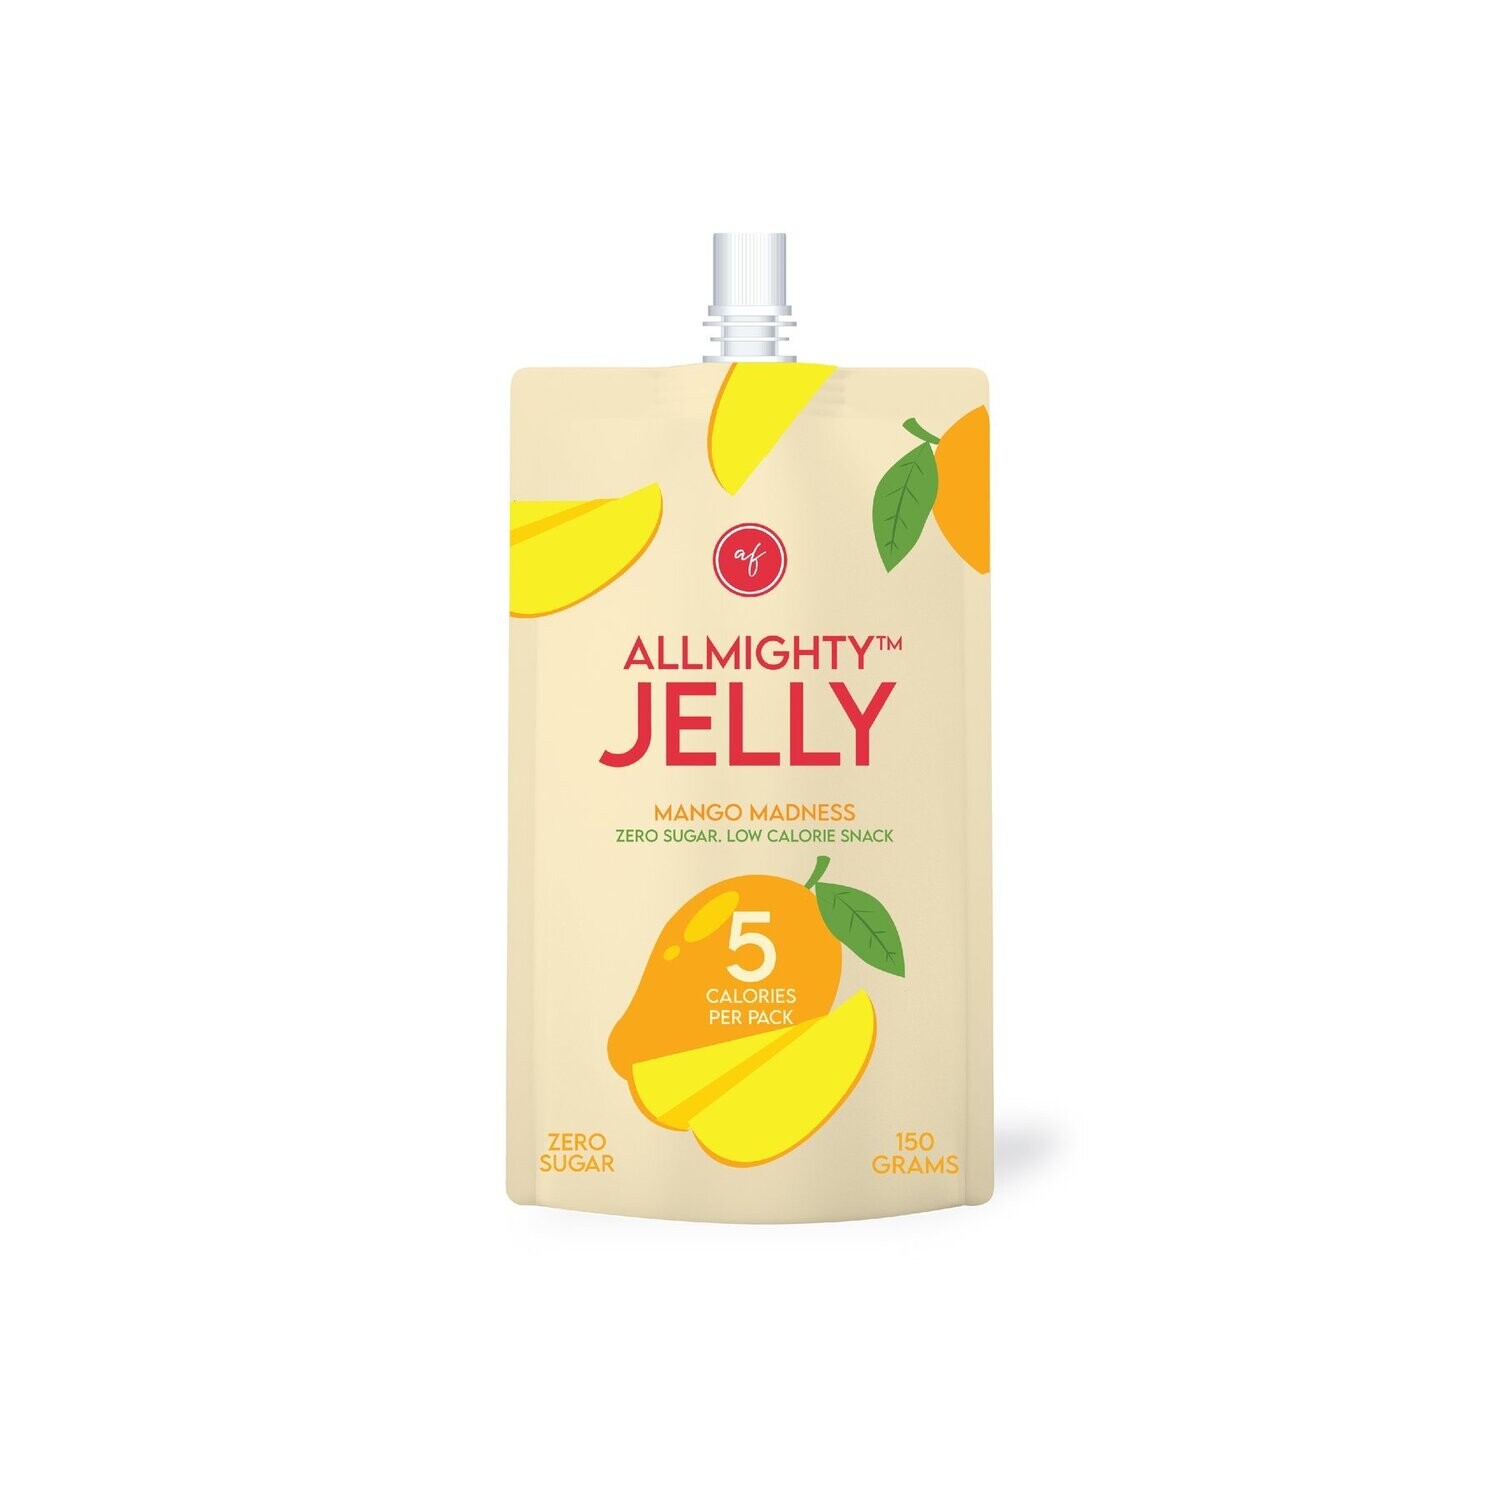 Keto Allmighty Konjac Jelly - Mango Madness